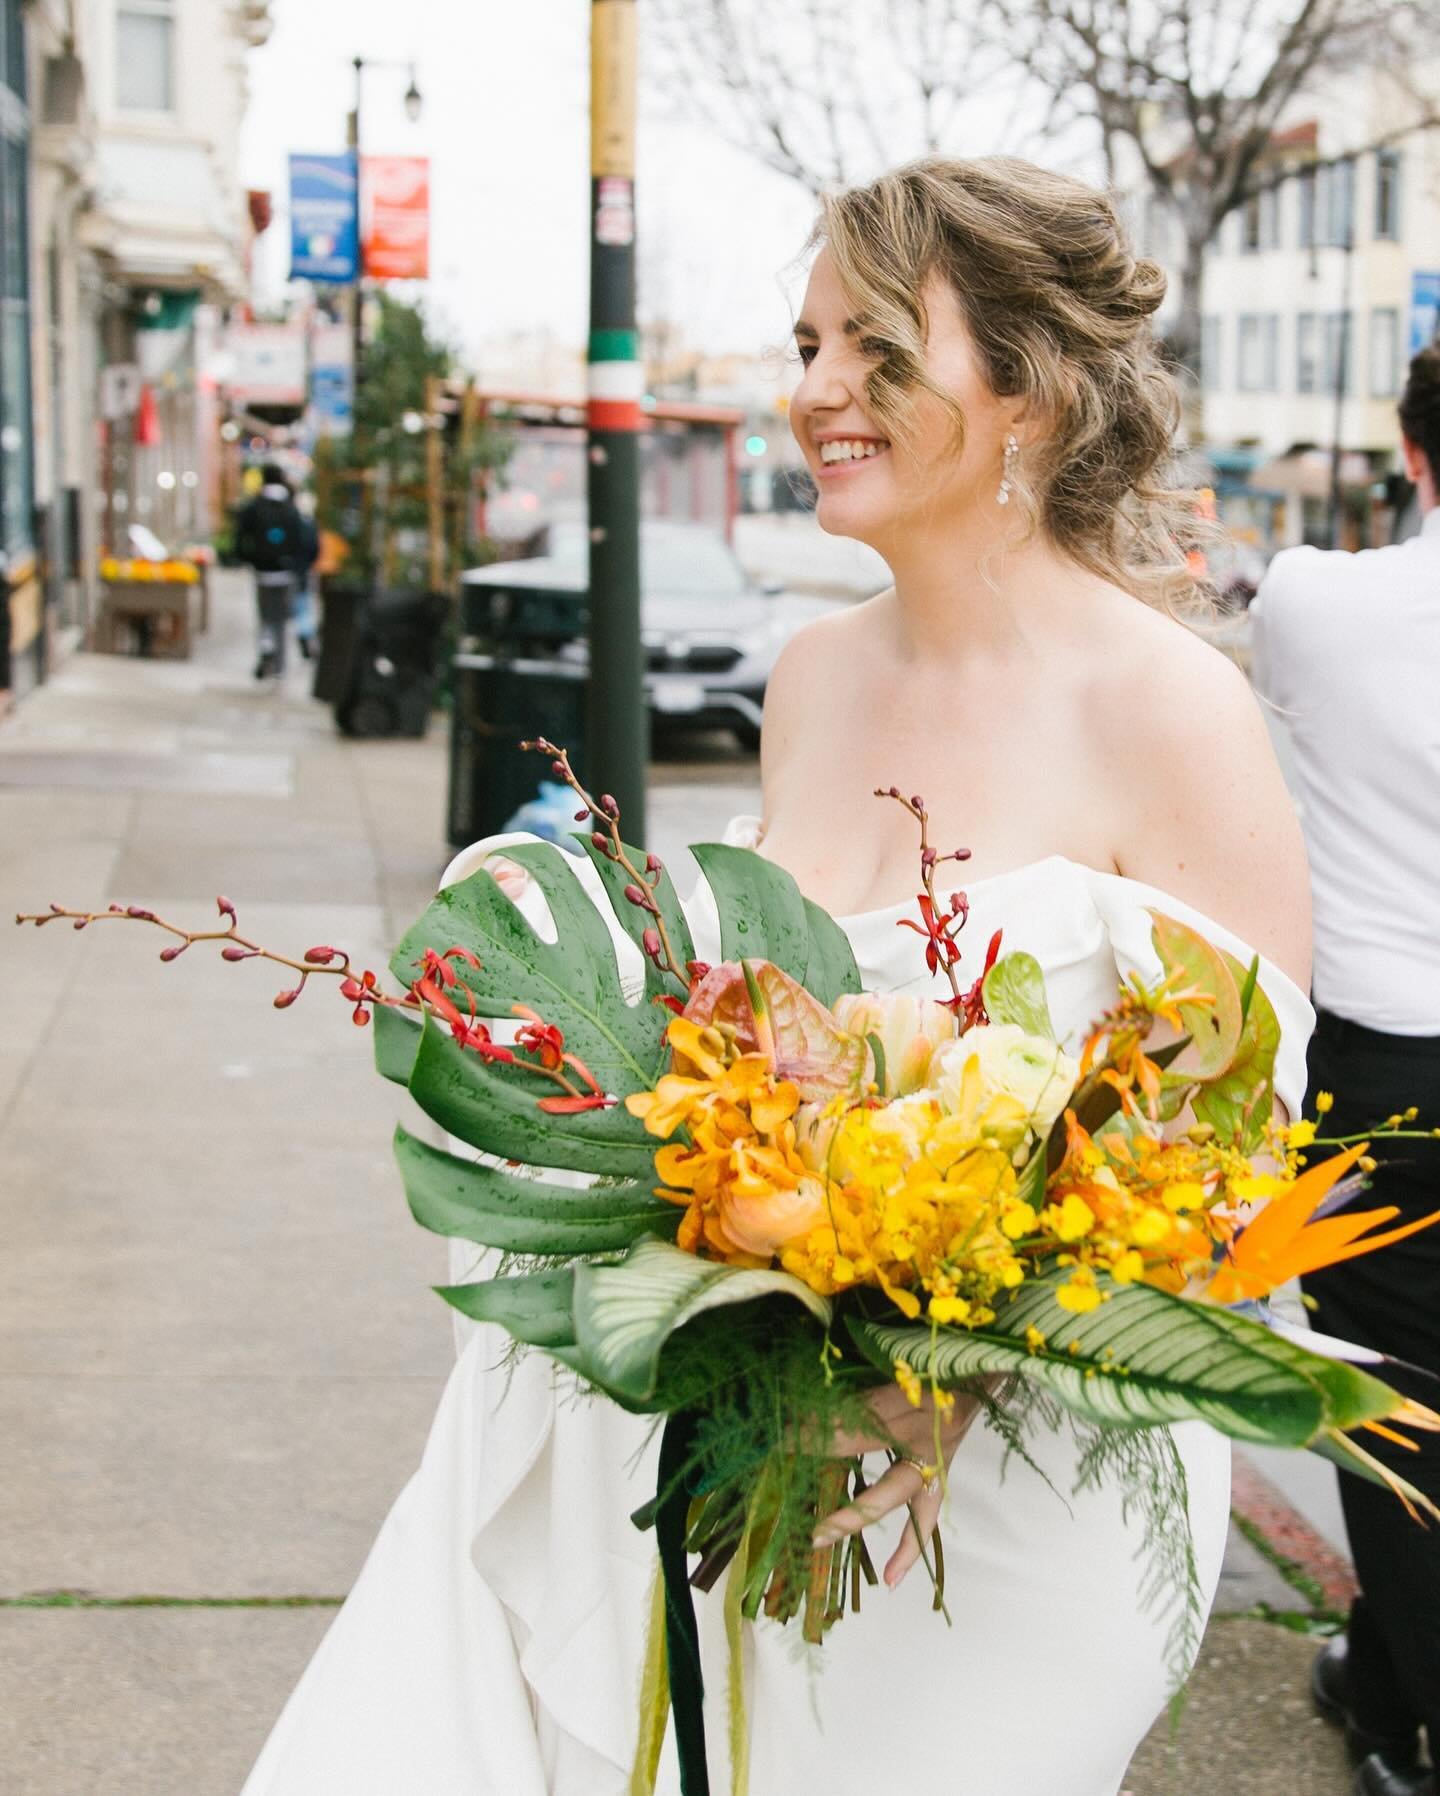 Rainy Leap Day Wedding at SF City Hall 🌺

Photographer @sonyayruel 
Venue @loveinsanfrancisco 
Florals @wildcoastflora 

#leapdaywedding #leapday #tropicals #tropicalflowers #🌺 #wedding #weddingflowers #weddinginspo #sfwedding #bayareawedding #baya